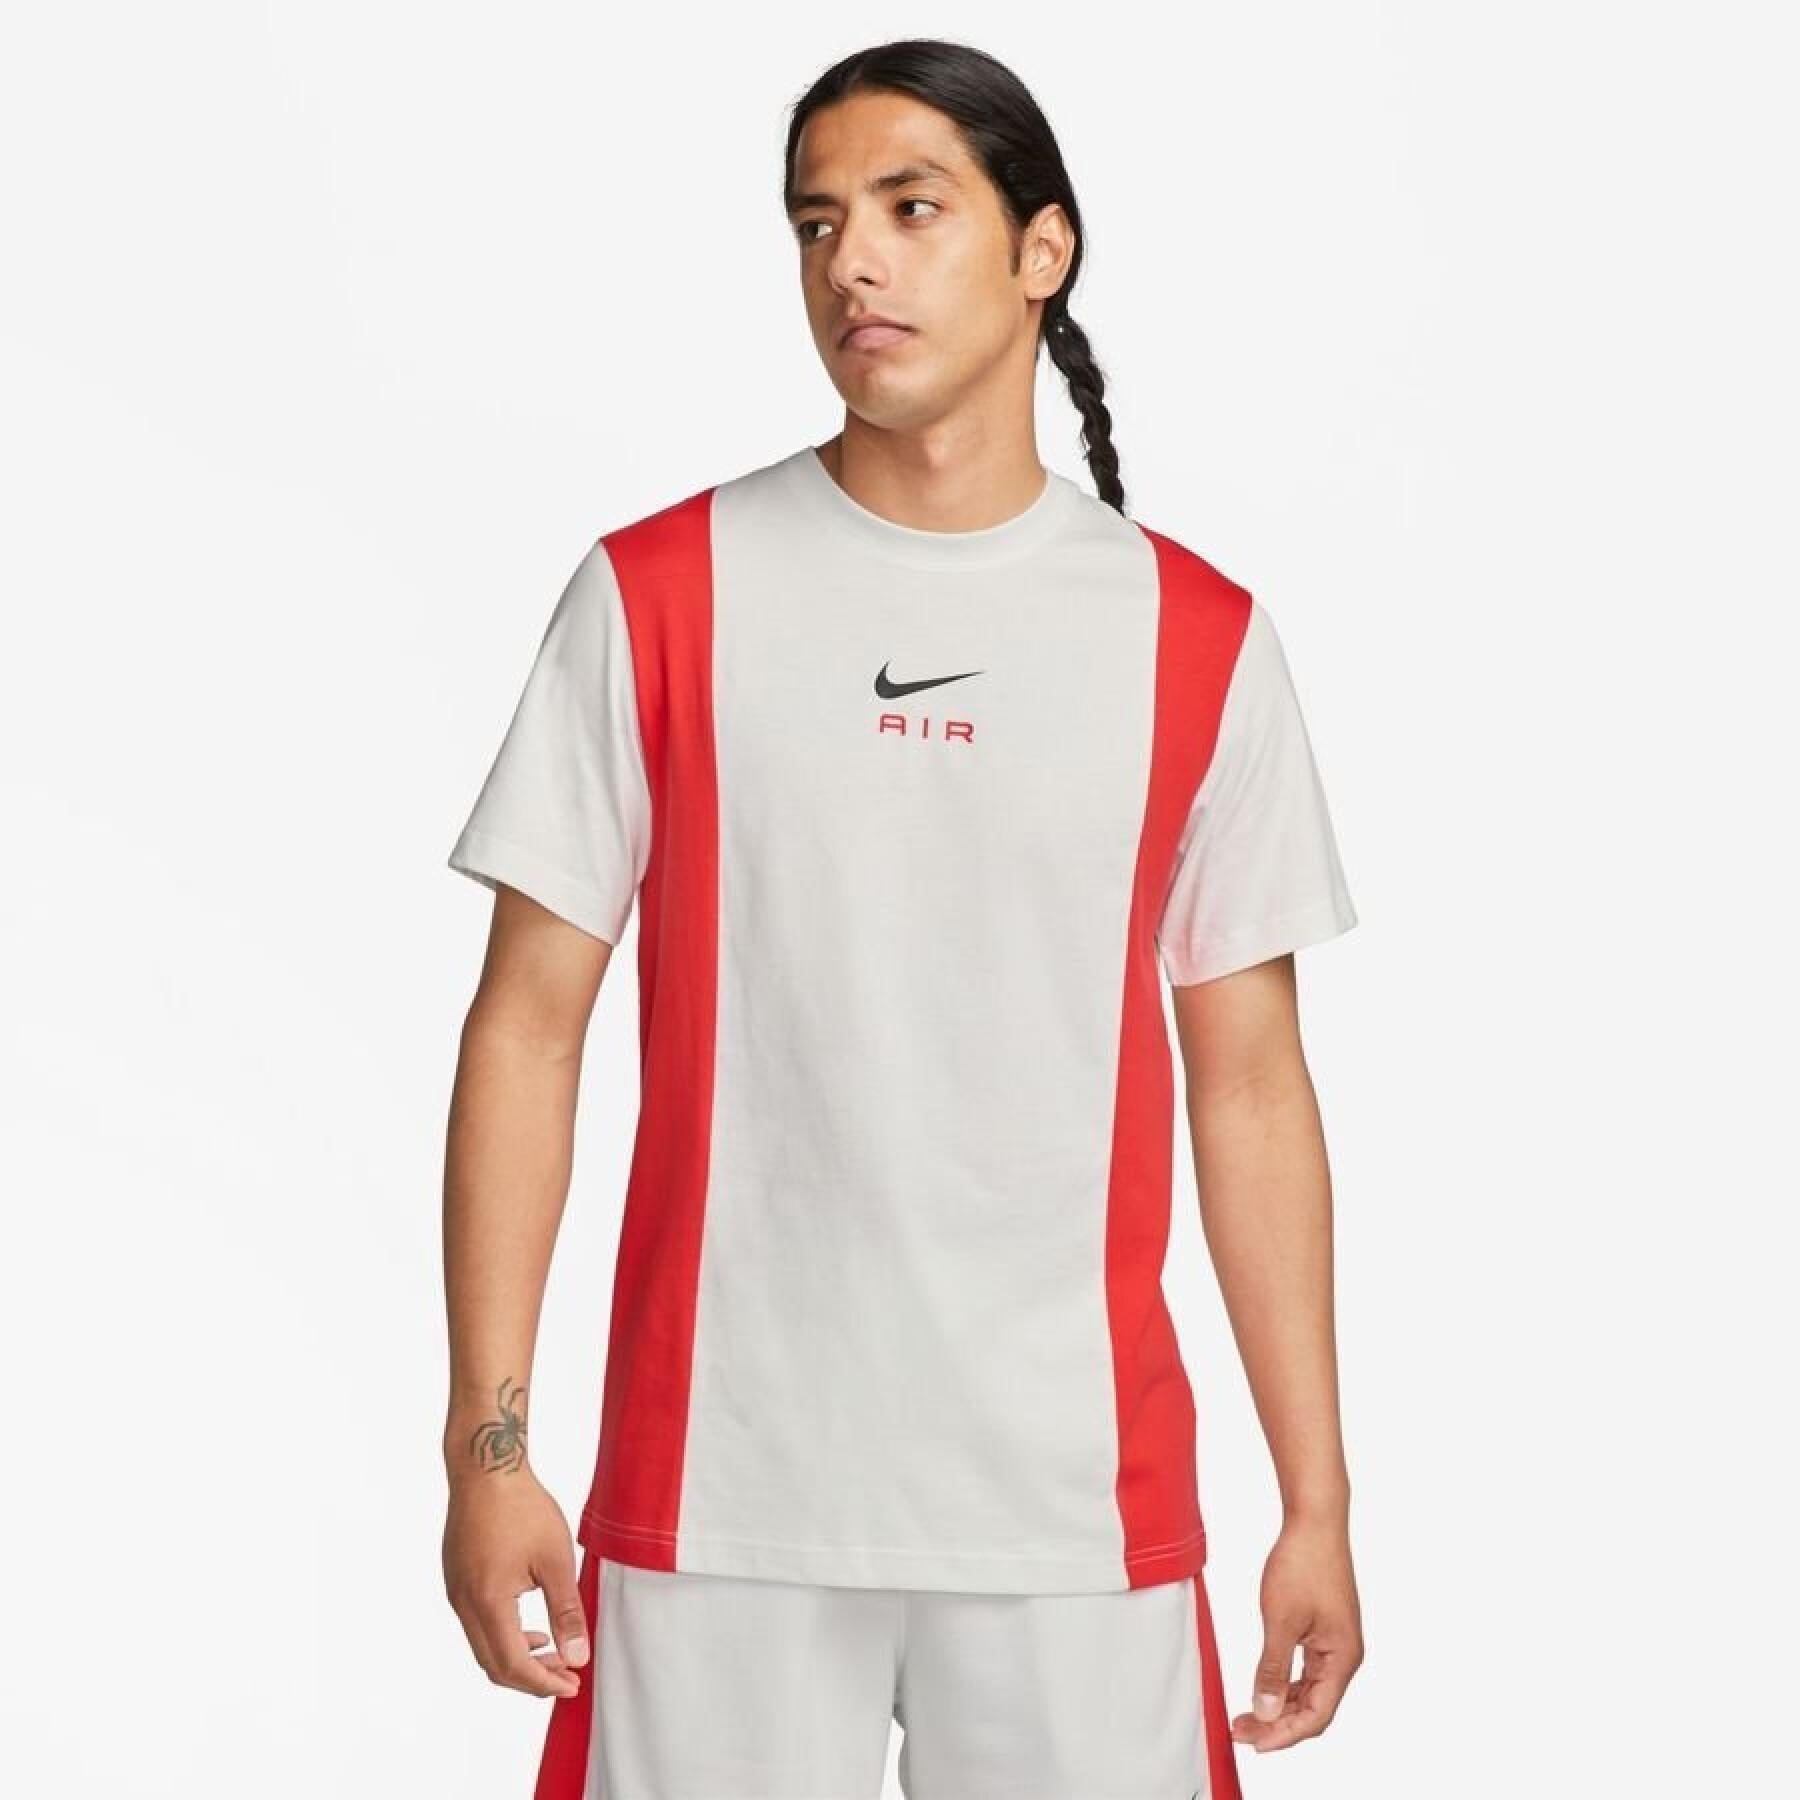 T-shirt Nike Air - Bianca/Rossa